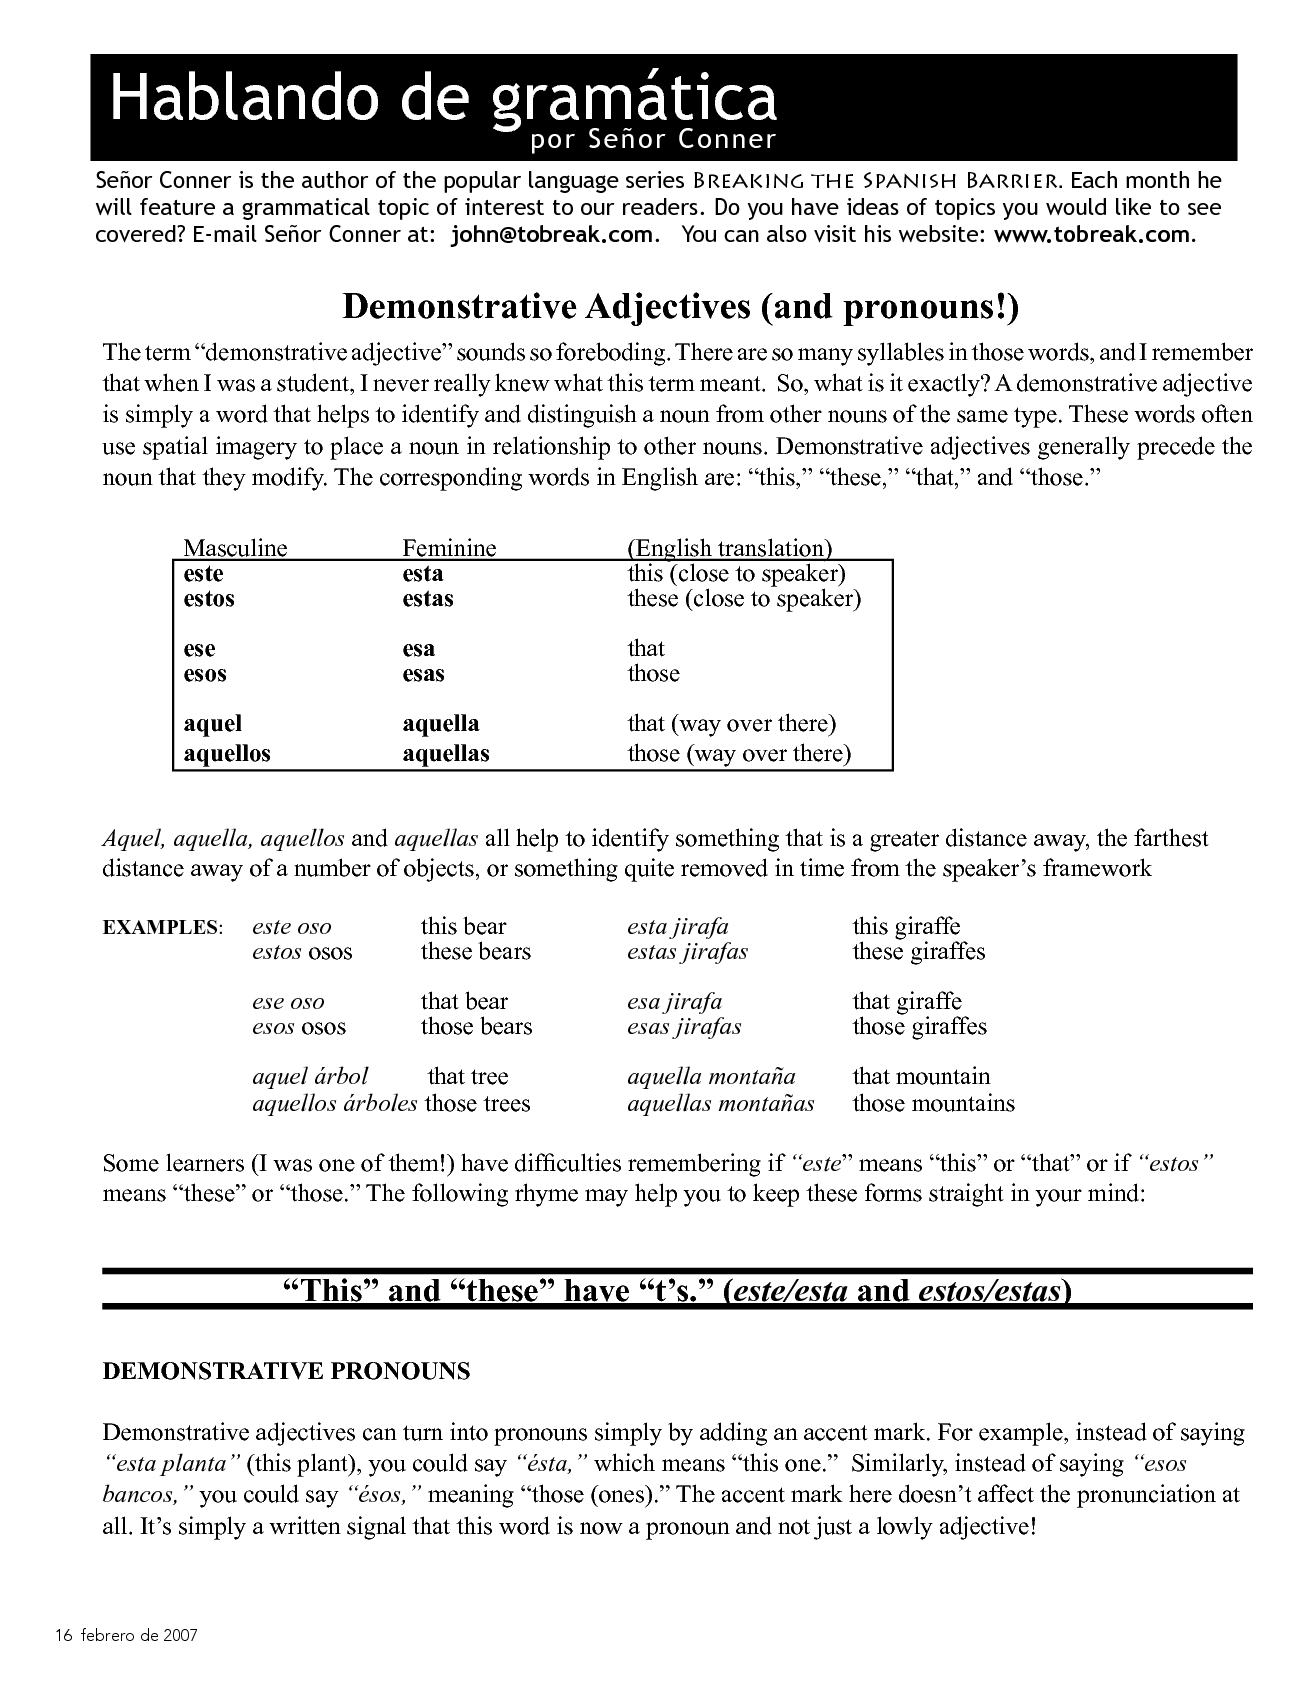 Demonstrative Adjectives and Pronouns Spanish Worksheet Image